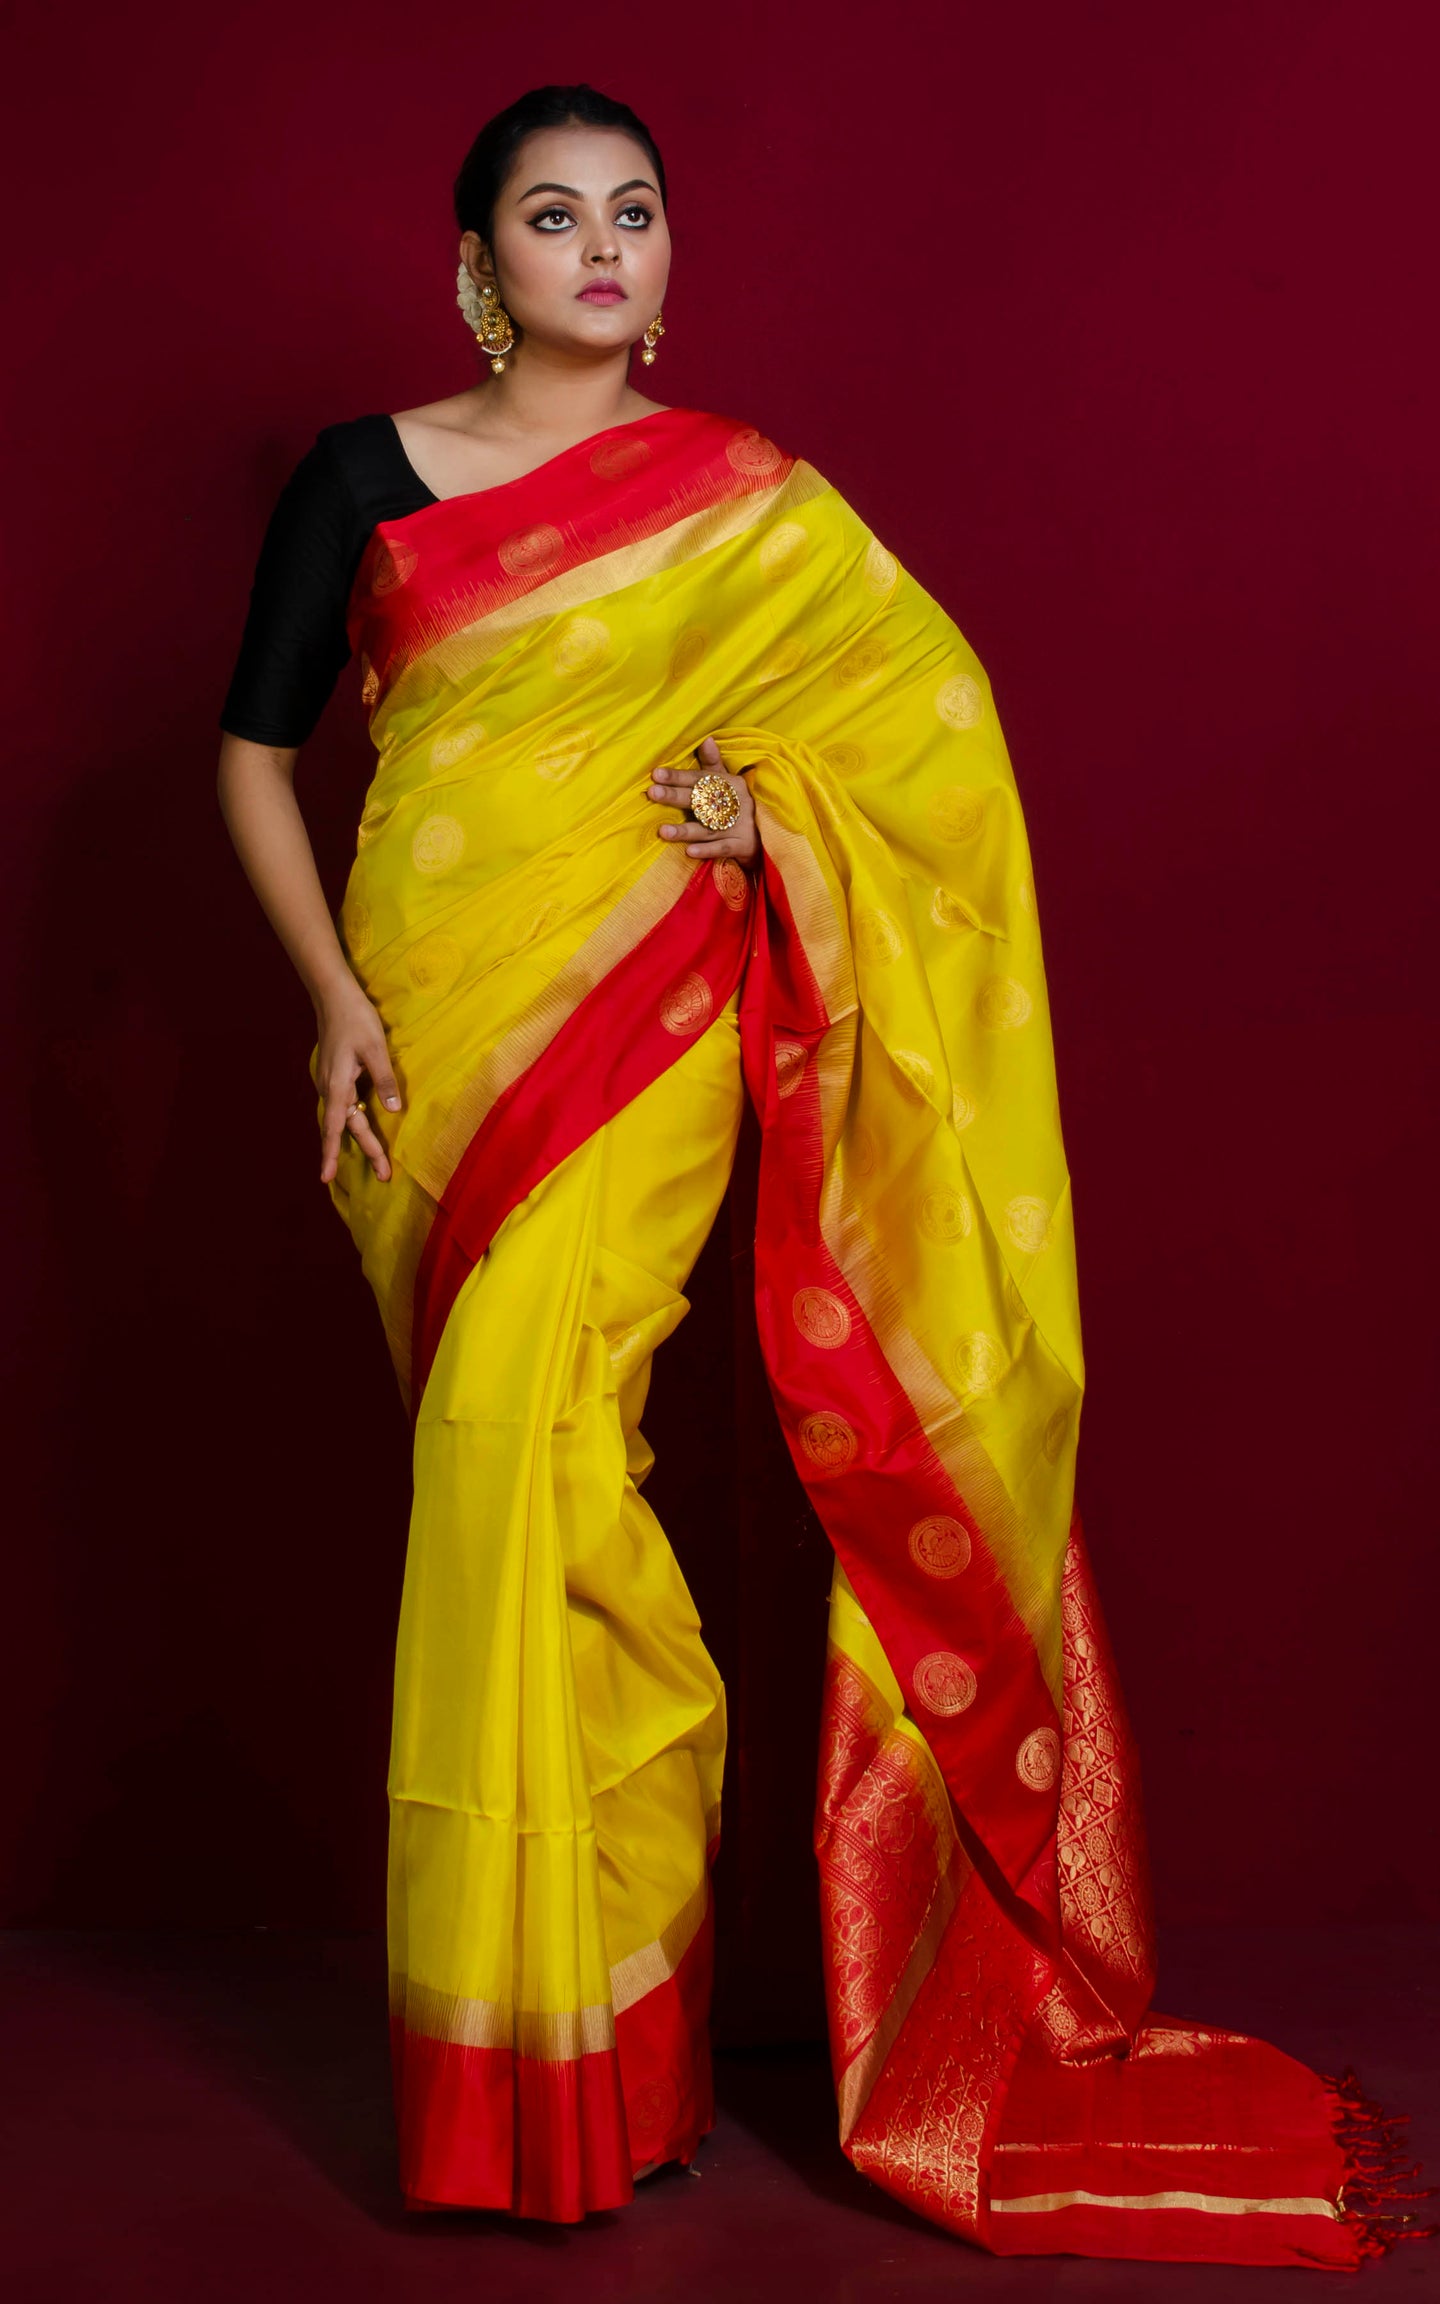 Premium Quality Soft Silk Nakshi Motif Work Border Kanchipuram Silk Saree in Bright Yellow and Red